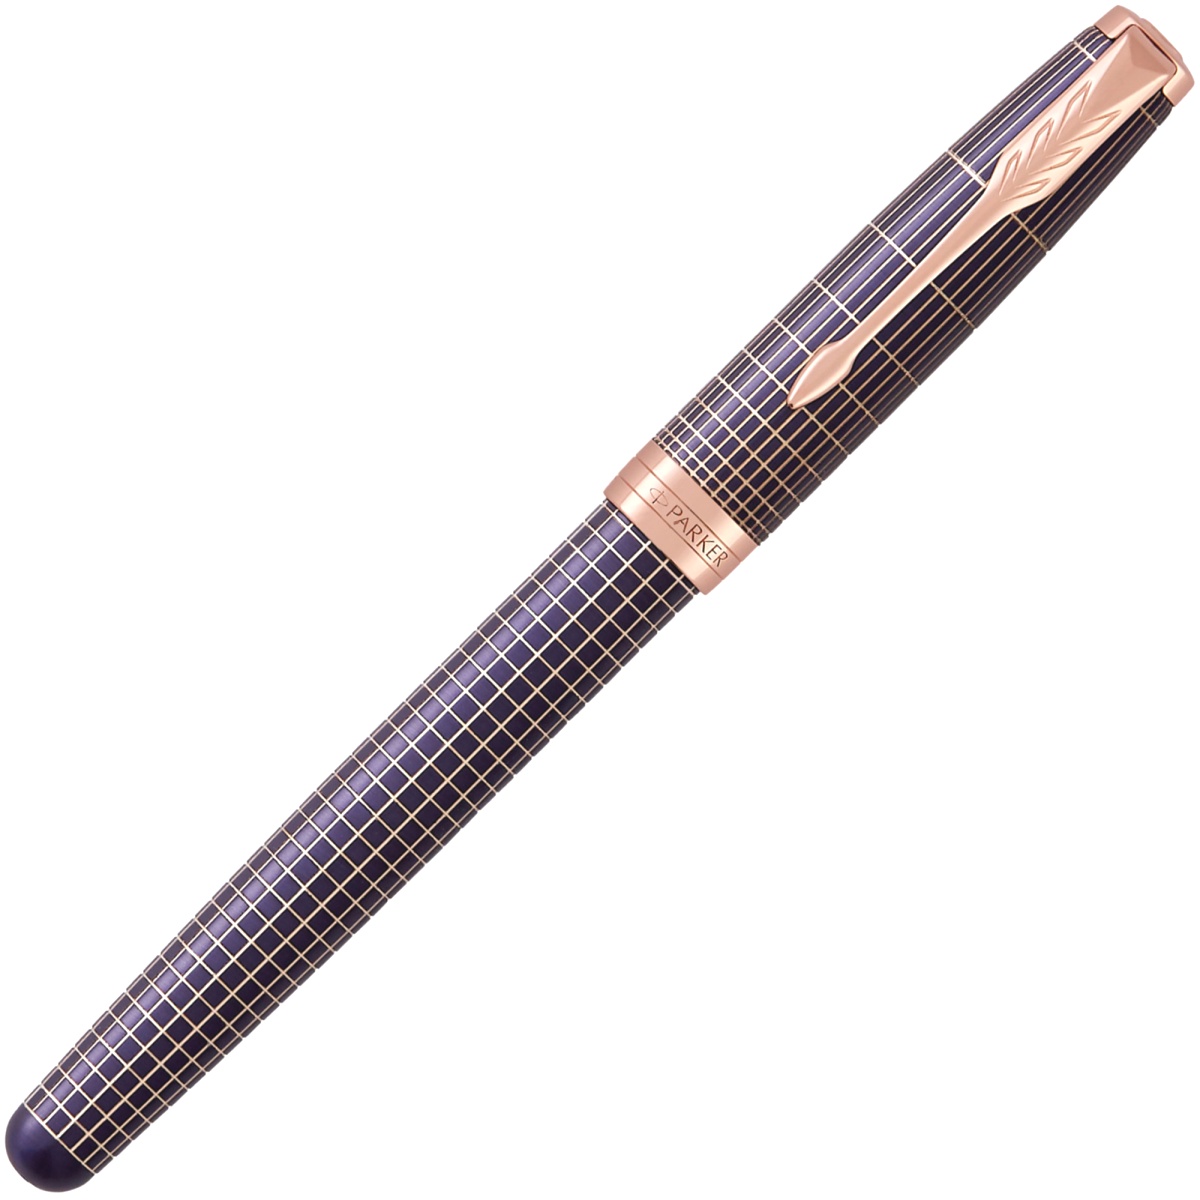  Перьевая ручка Parker Sonnet Core, Purple Matriz Cisele GT (Перо F), фото 2